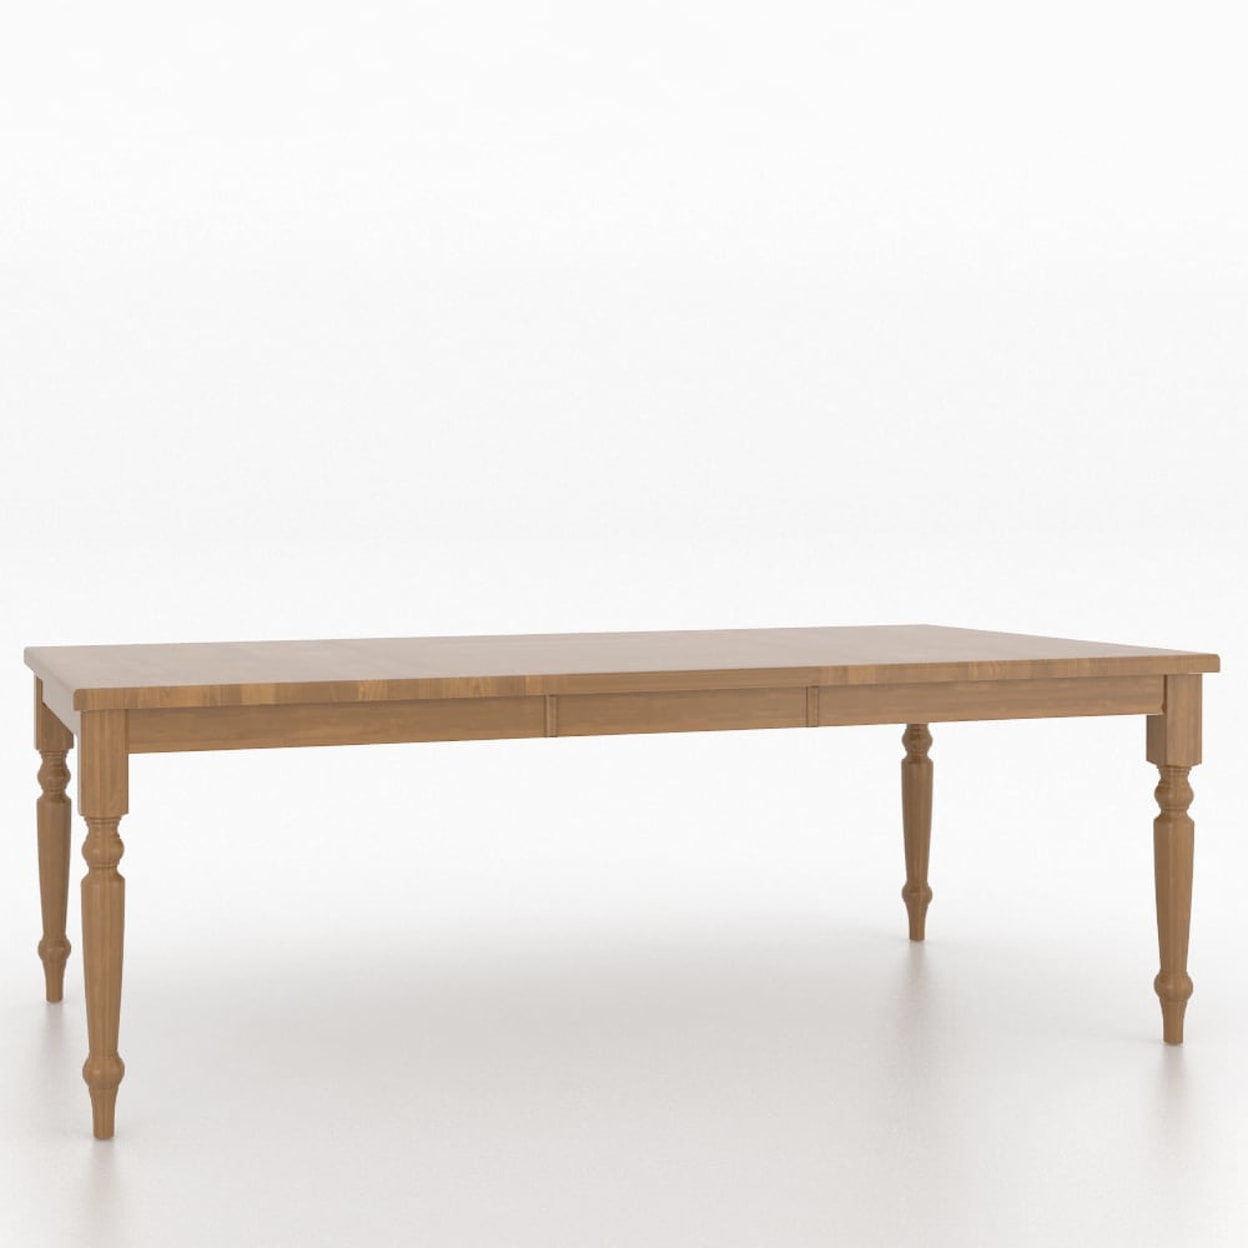 Canadel Canadel Rectangular Wood Table